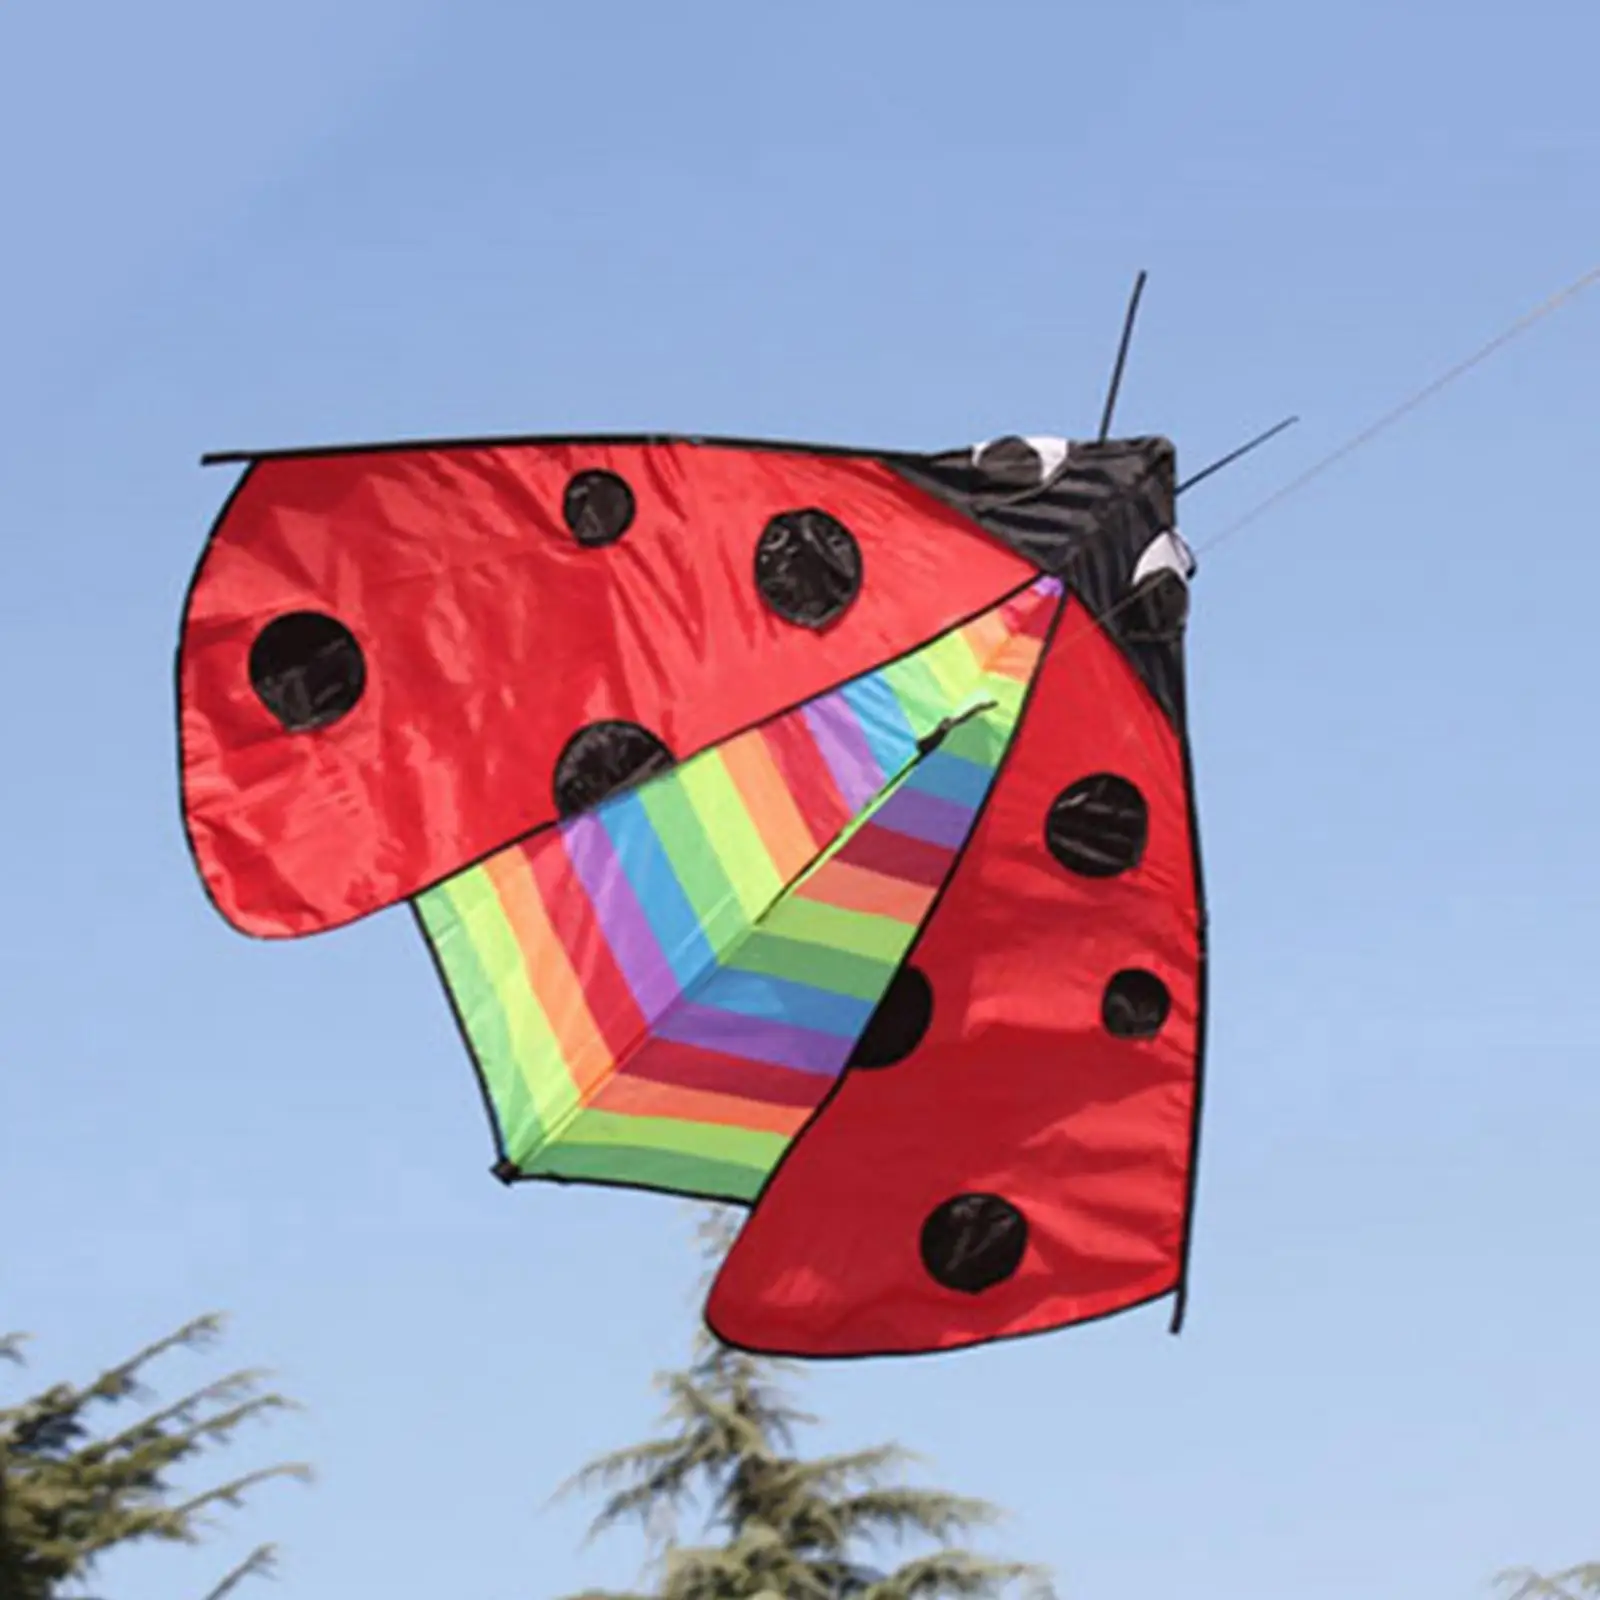 Large Triangle Ladybug Kite Fly Kite Easy Control Flying Toys Vivid Delta Kite for Park Garden Family Trips Beach Outdoor